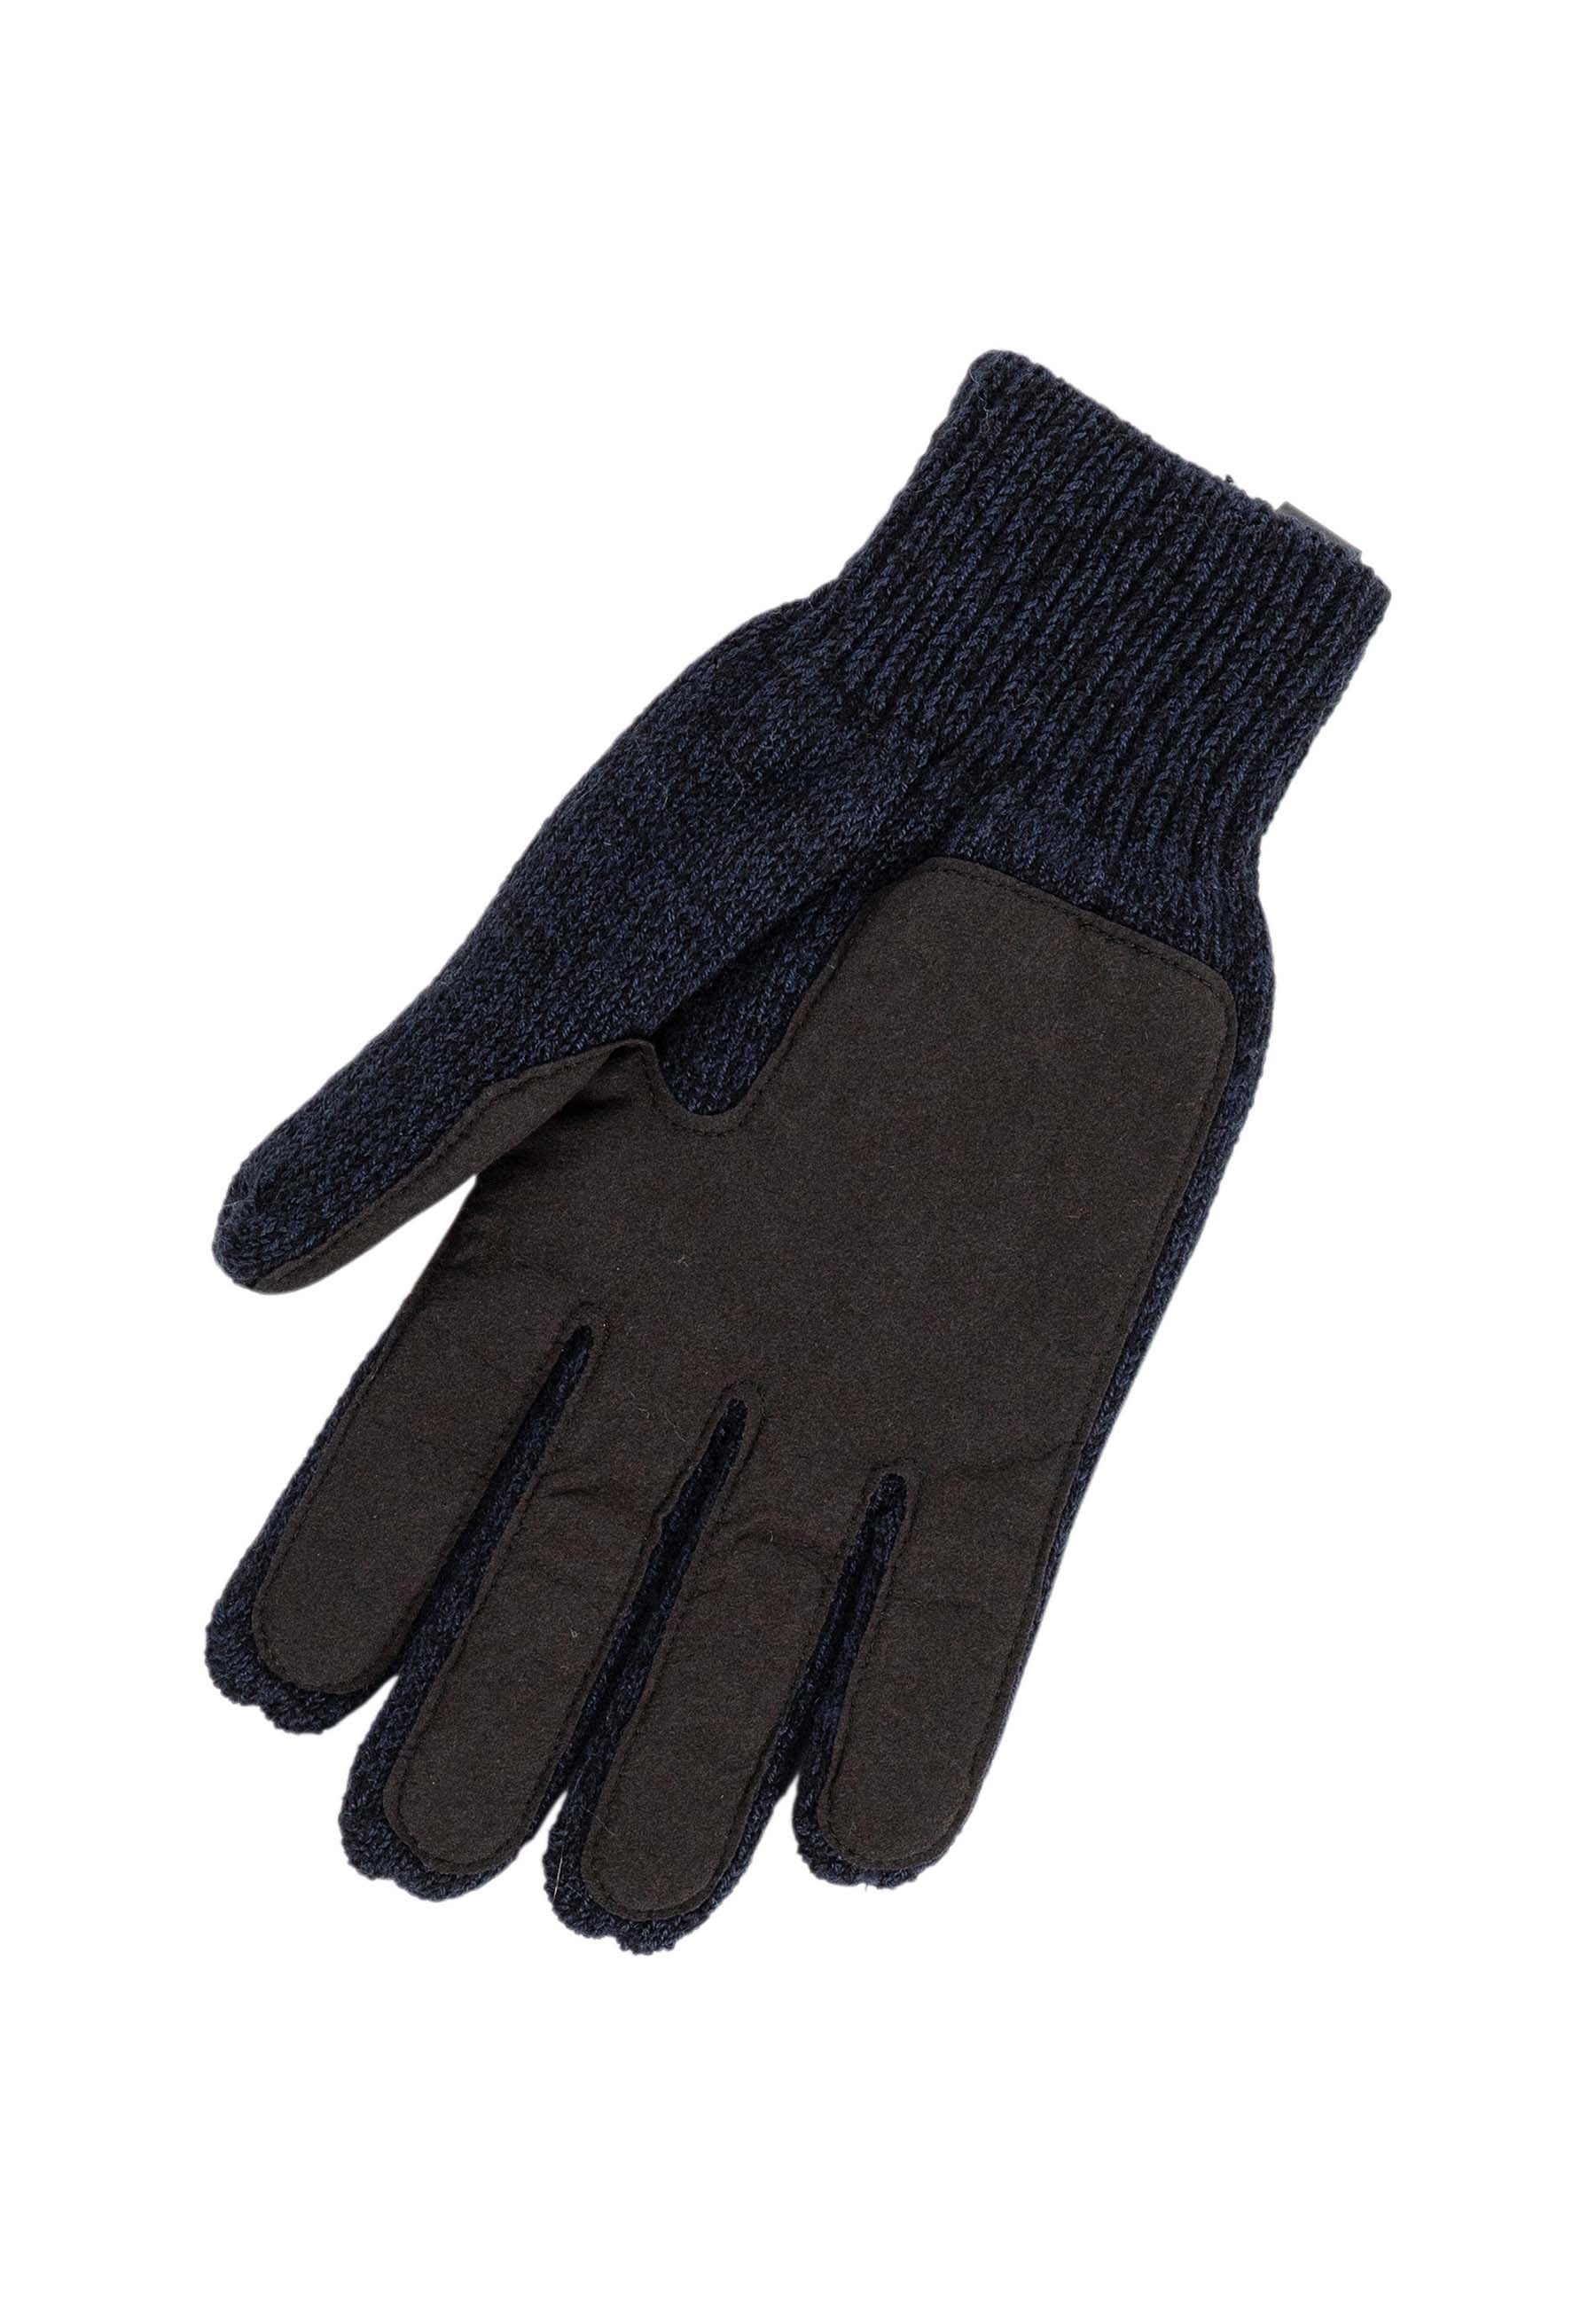 Palm Patch Gloves